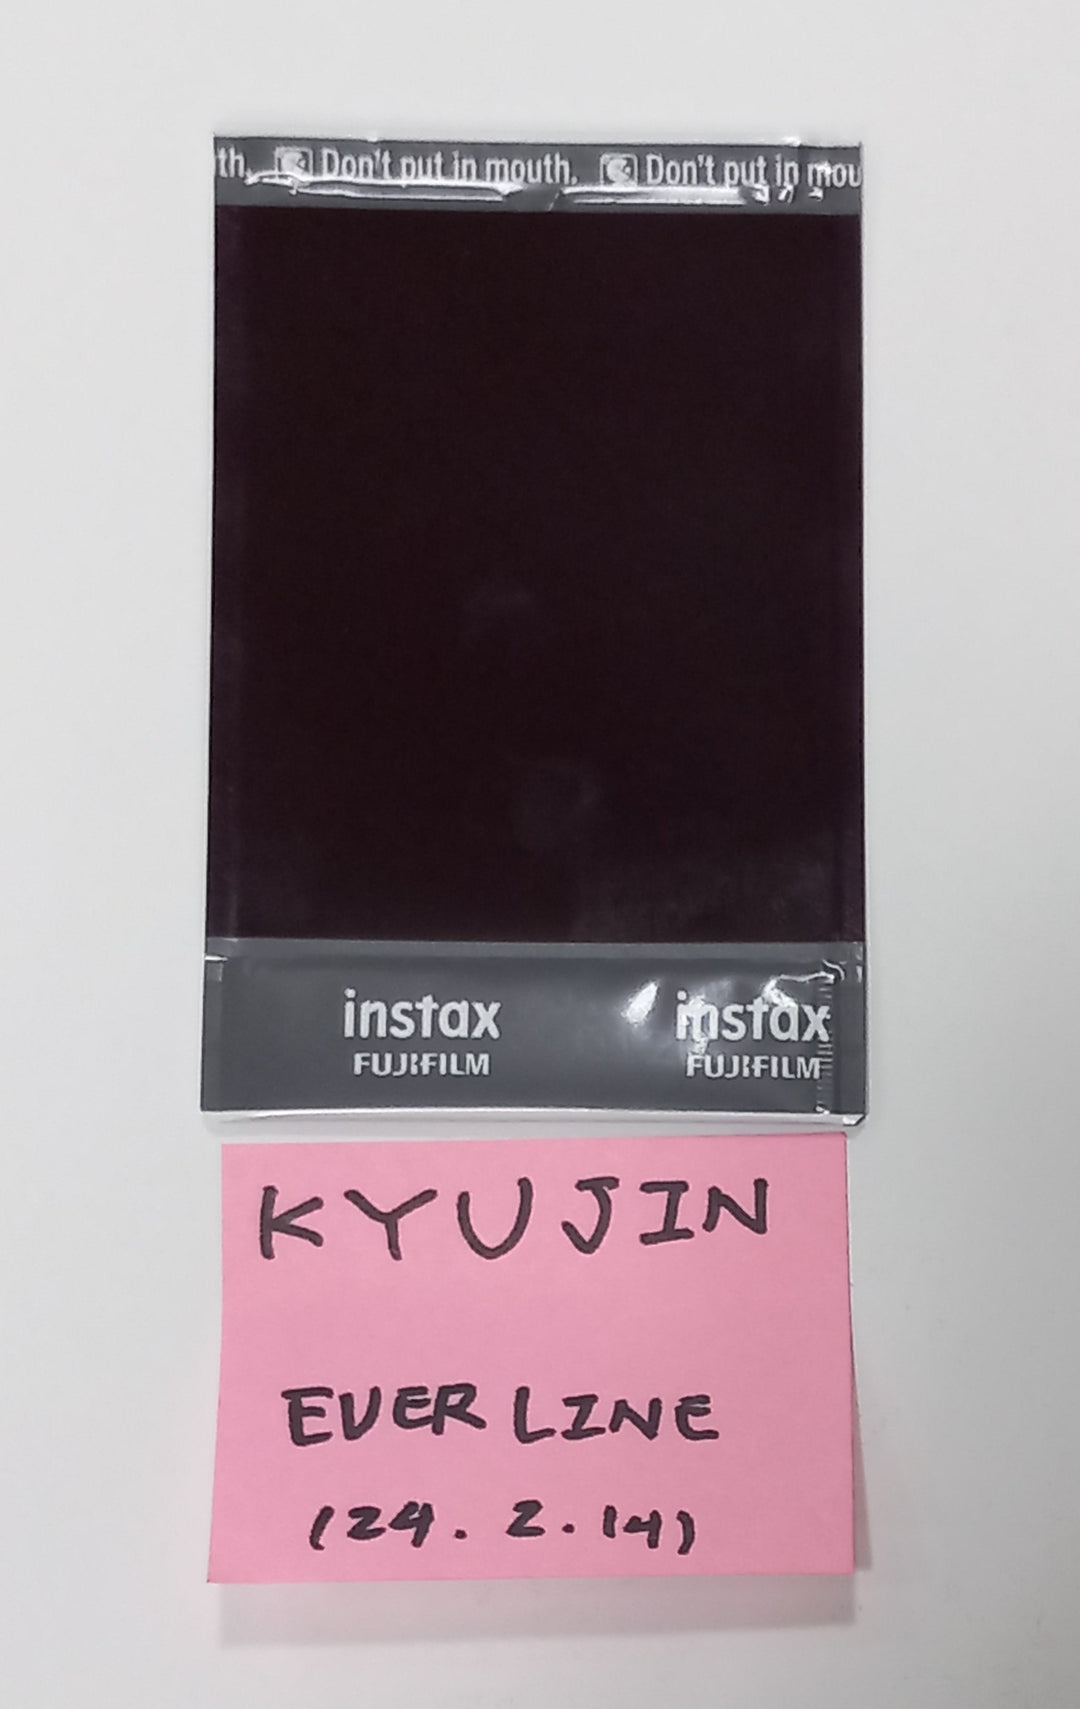 Kyujin (Of NMIXX) "Fe3O4: BREAK" - Hand Autographed(Signed) Polaroid [24.2.14]